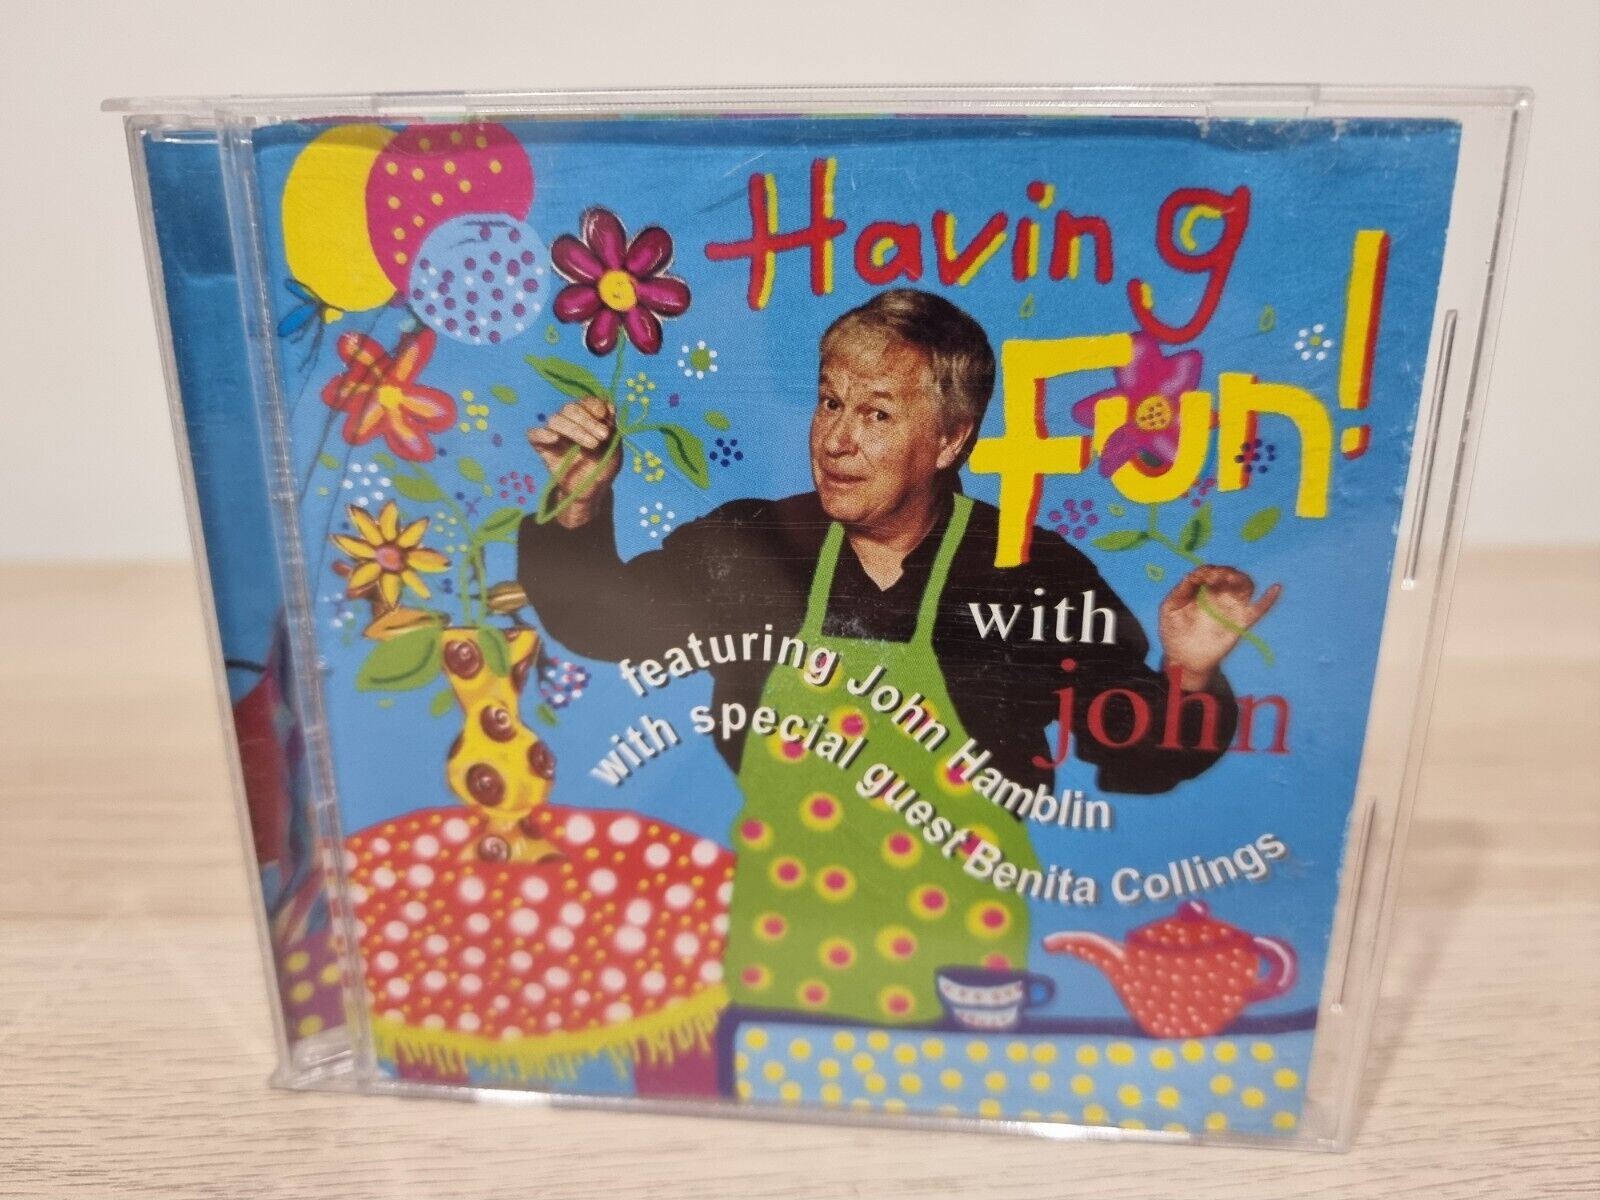 Having Fun With John CD John Hamblin Benita Collings Play School Australia ABC